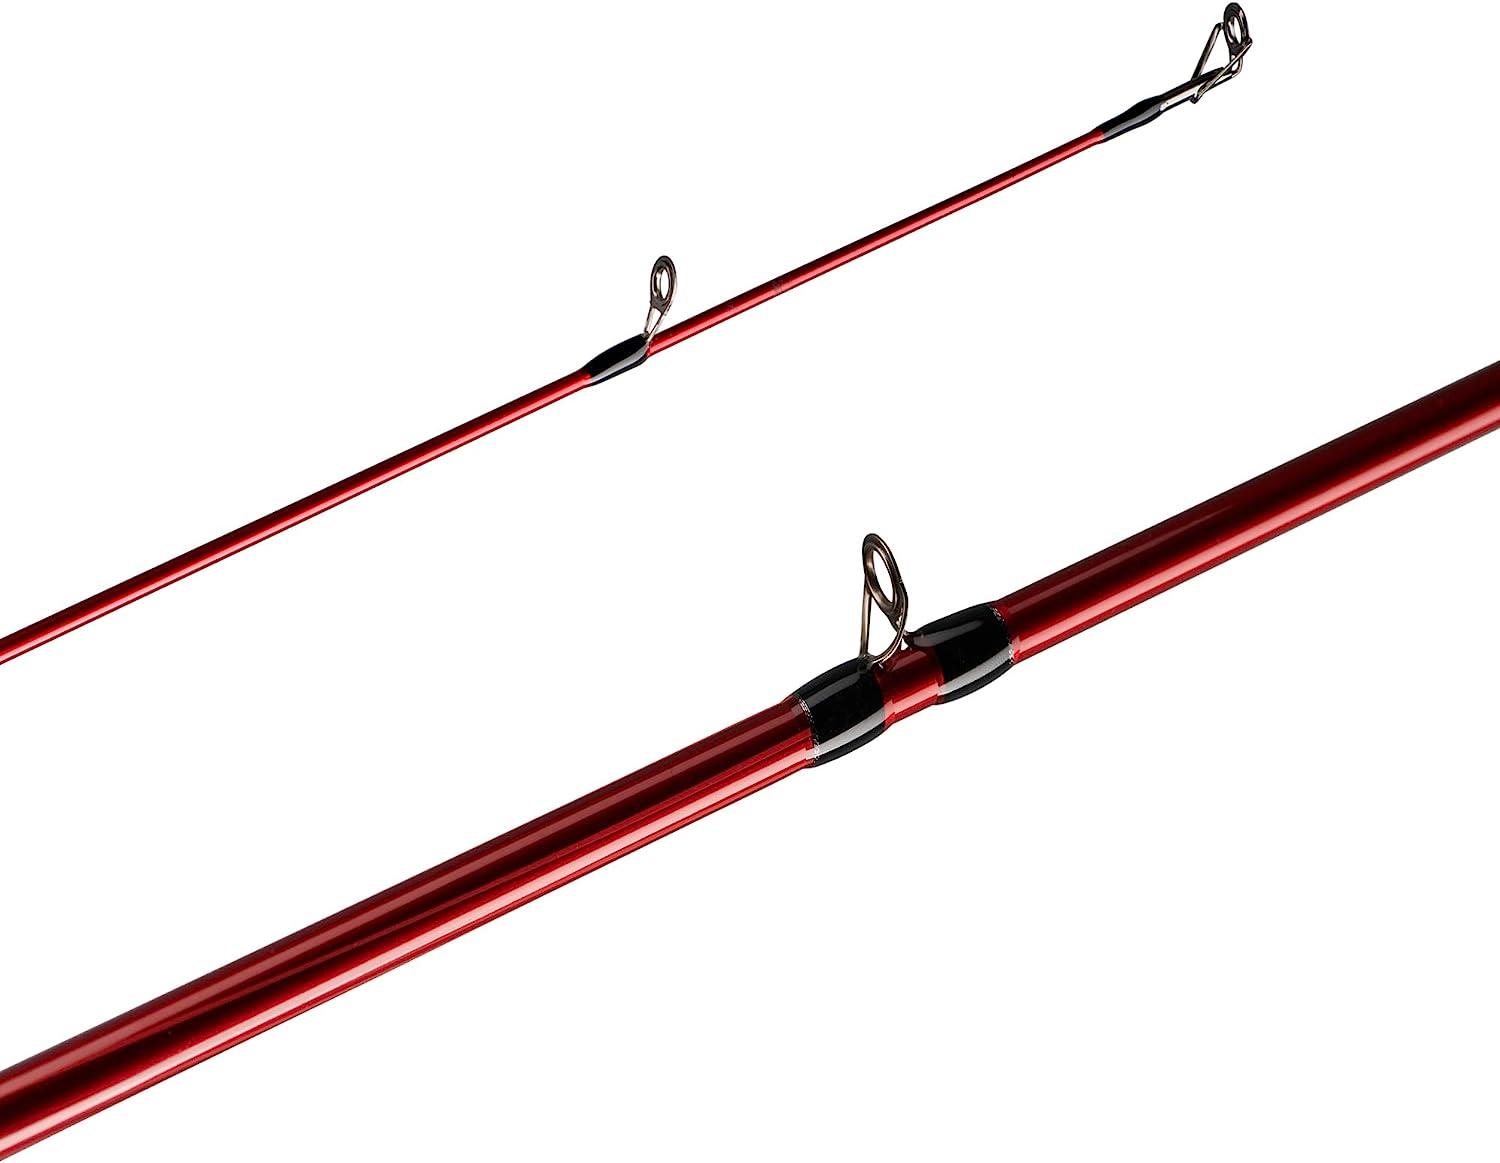 Berkley Cherrywood HD Casting Fishing Rods New Model 6'6 - Medium